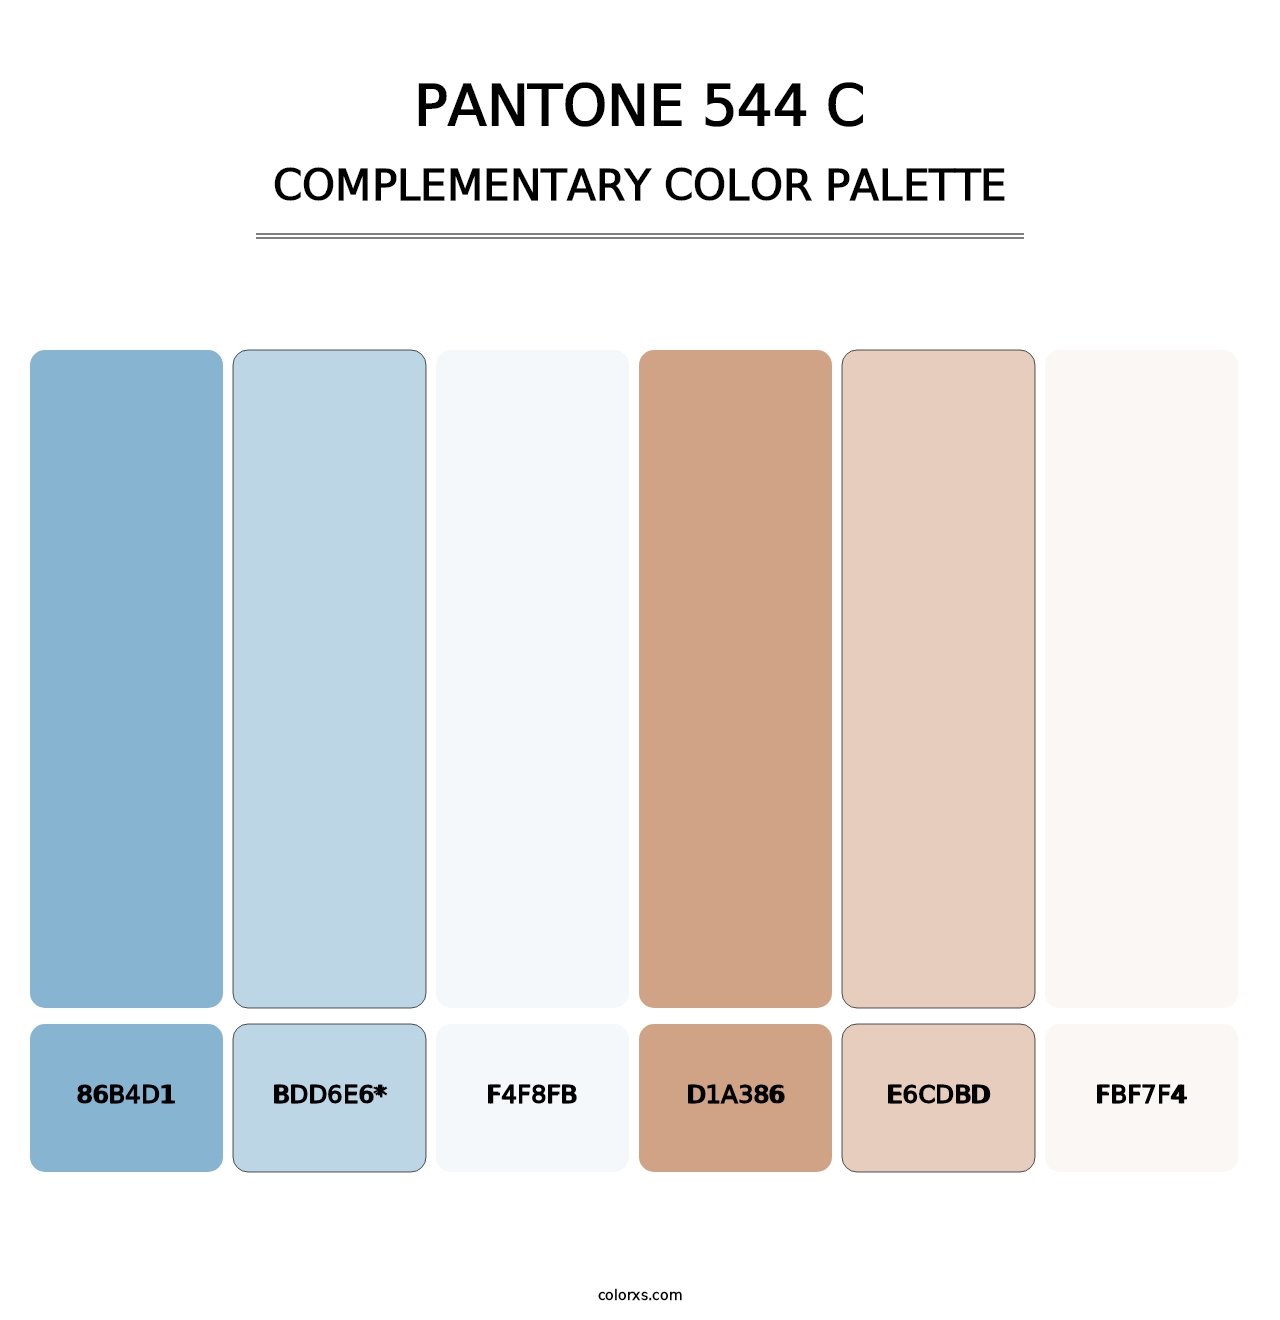 PANTONE 544 C - Complementary Color Palette